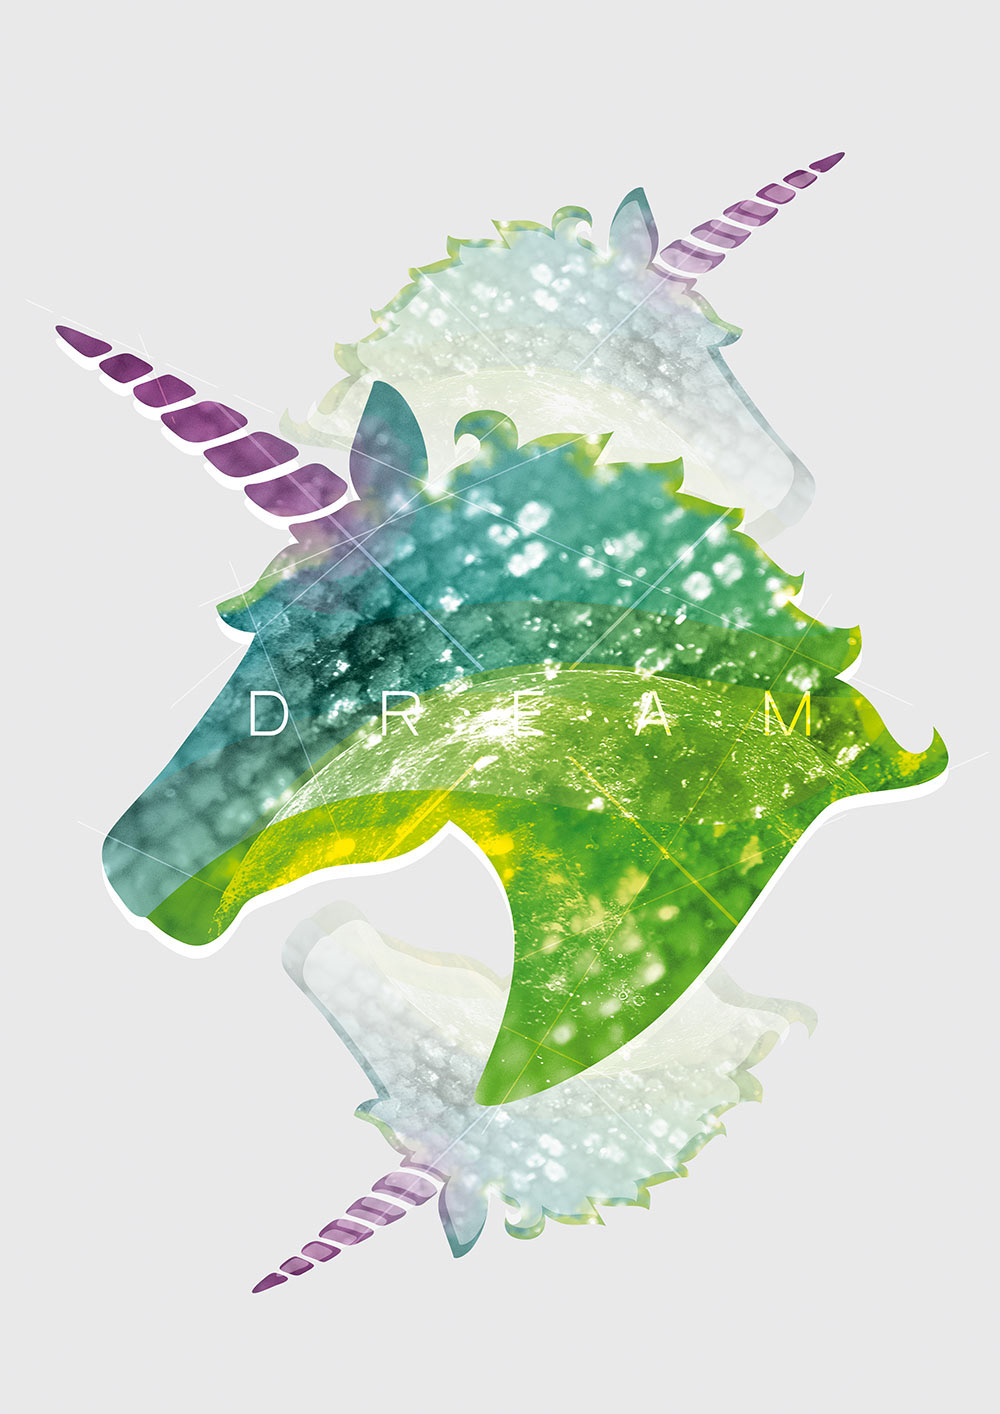 diseño gráfico Disseny gràfic  meow  tiger  unicorn Hot  star  Anchor  fantasy